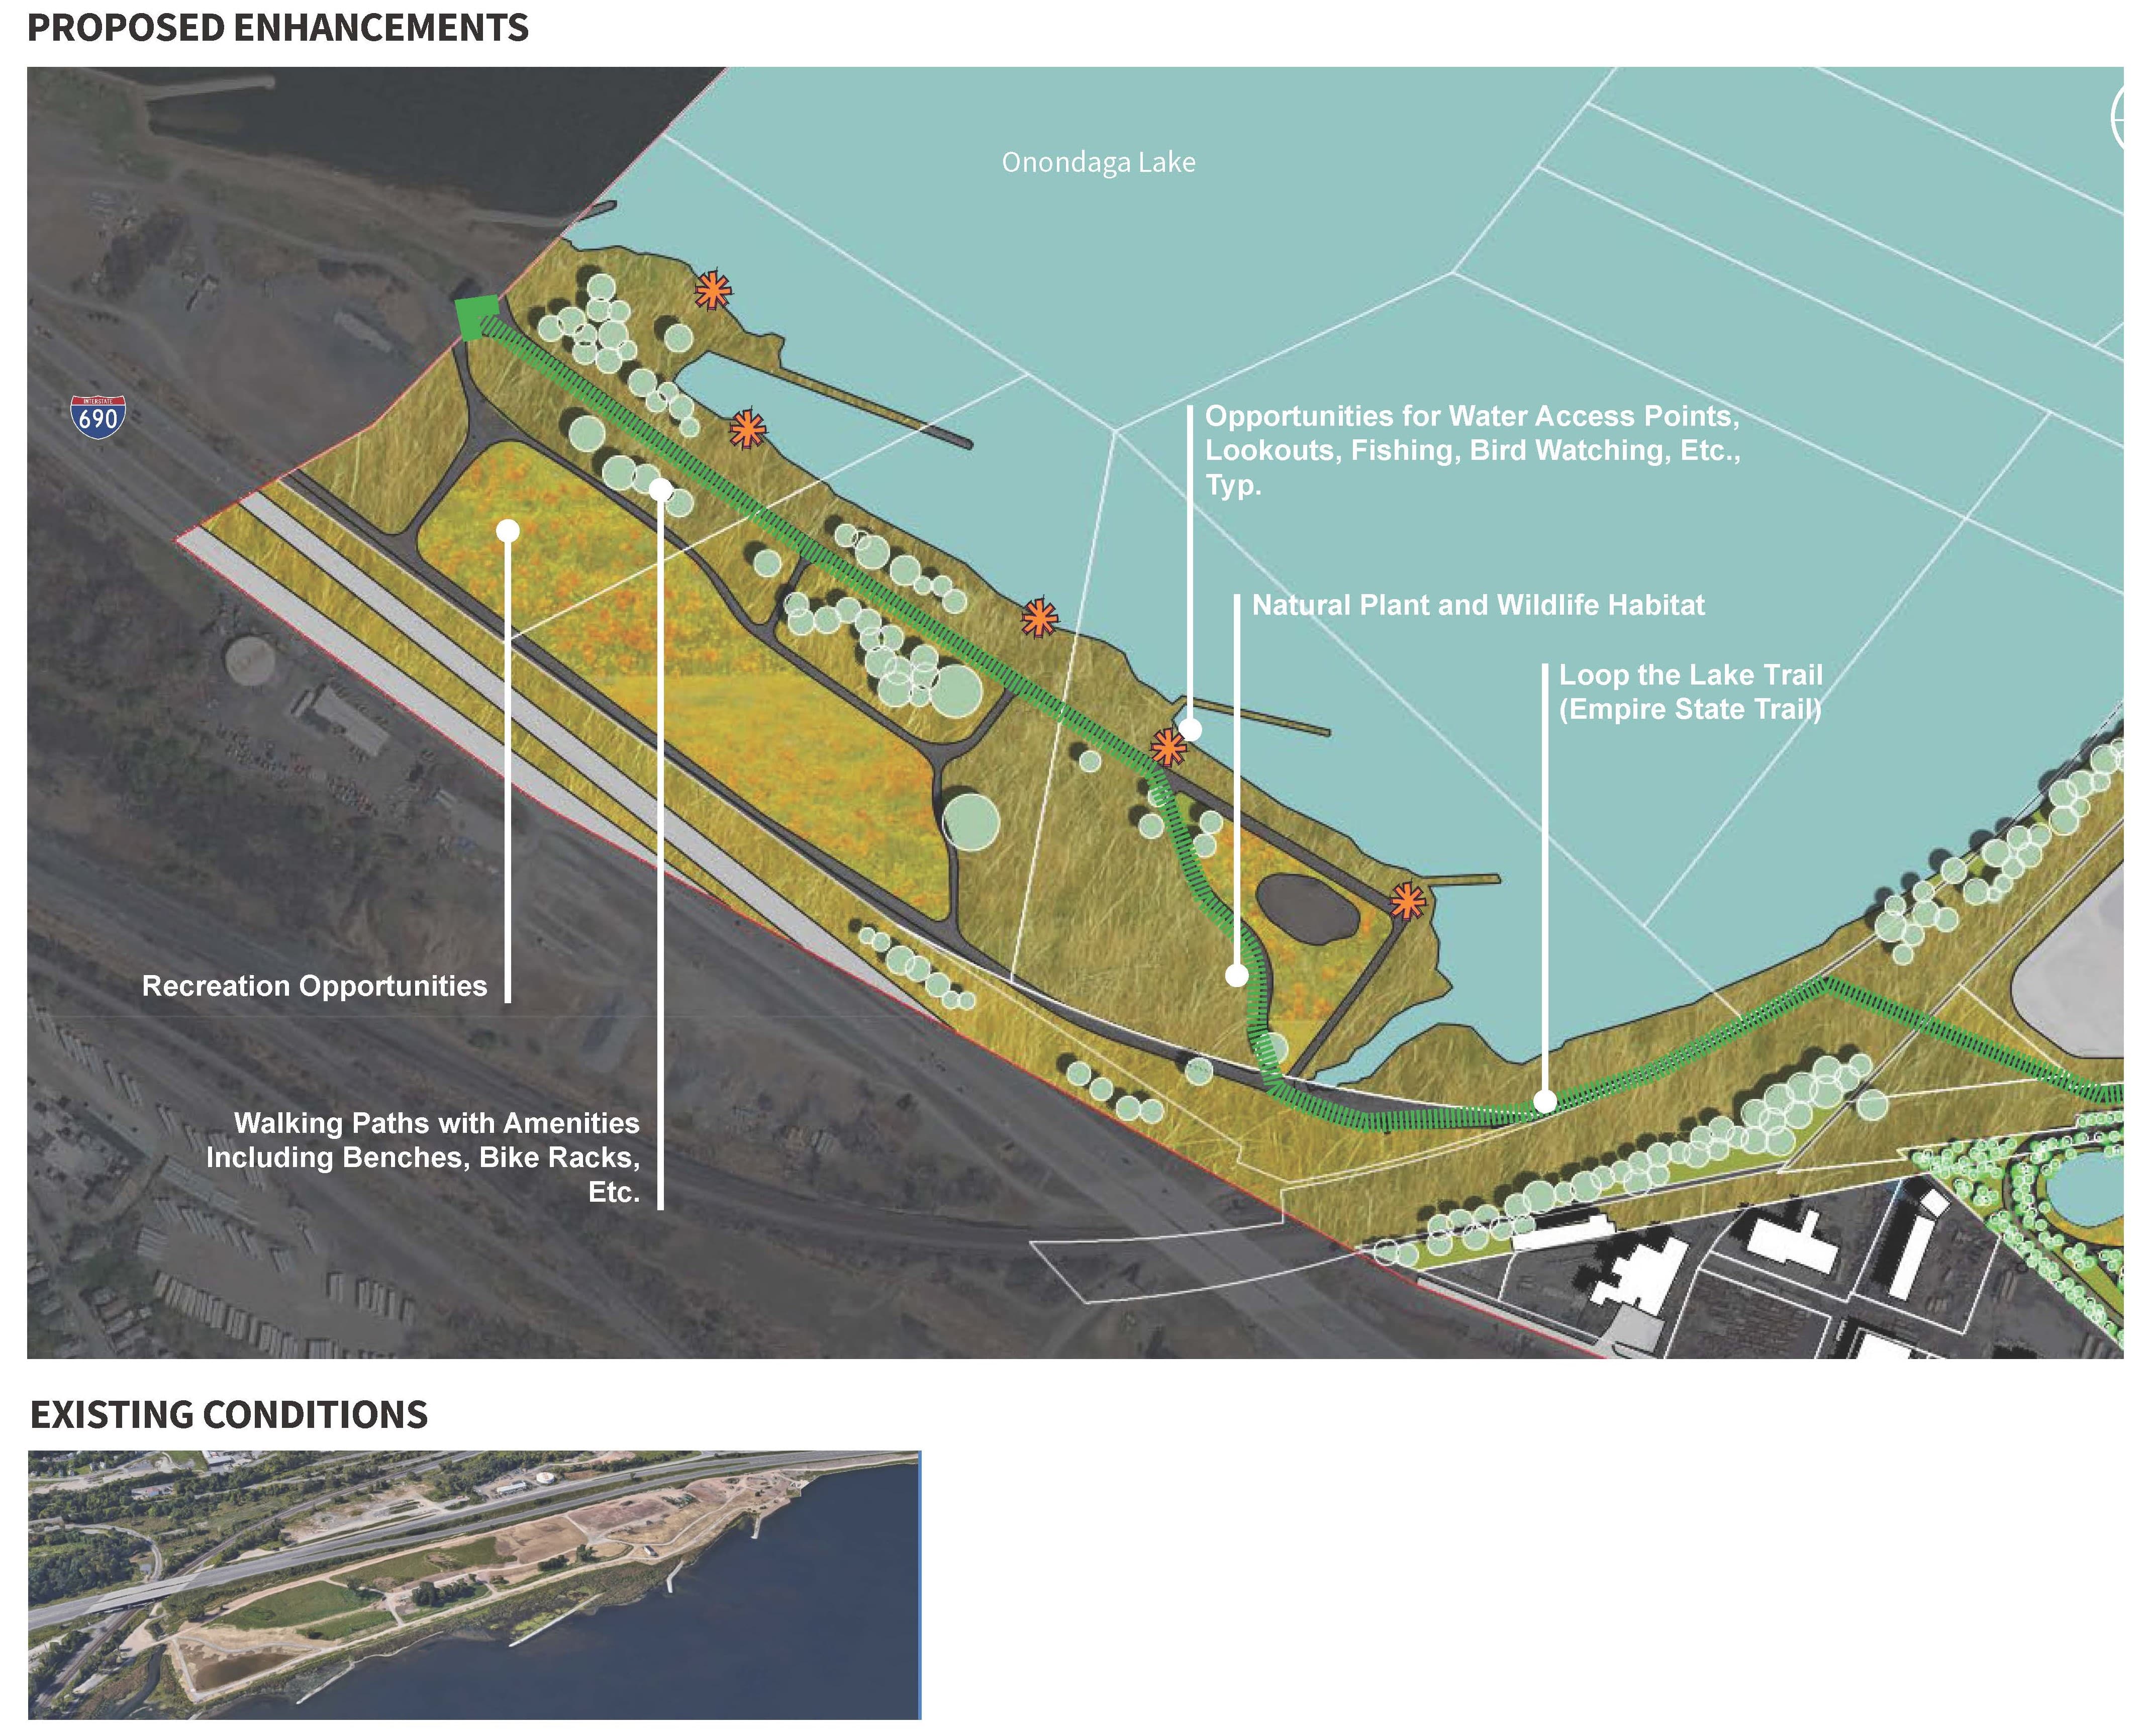 Intergrated Beachfront Development Plan for NMMM